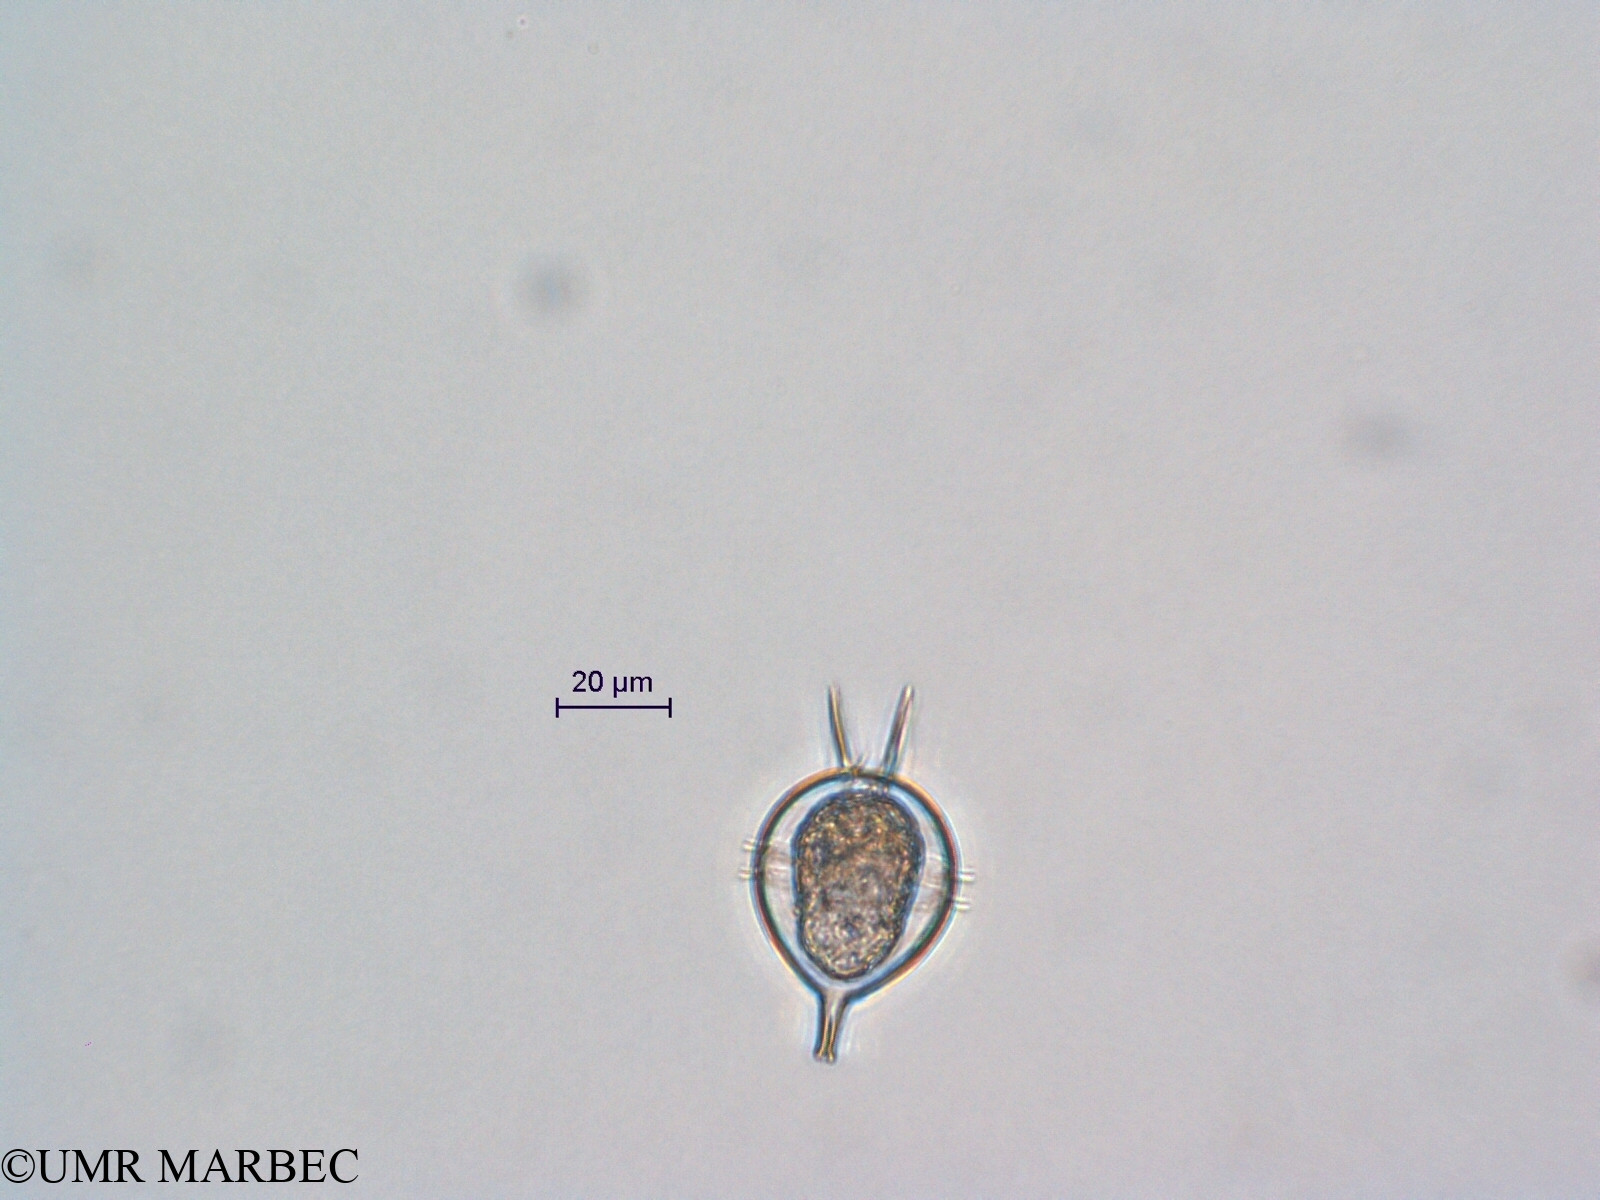 phyto/Scattered_Islands/all/COMMA April 2011/Protoperidinium cassum (ancien Protoperidinium sp22 recomposé)(copy).jpg